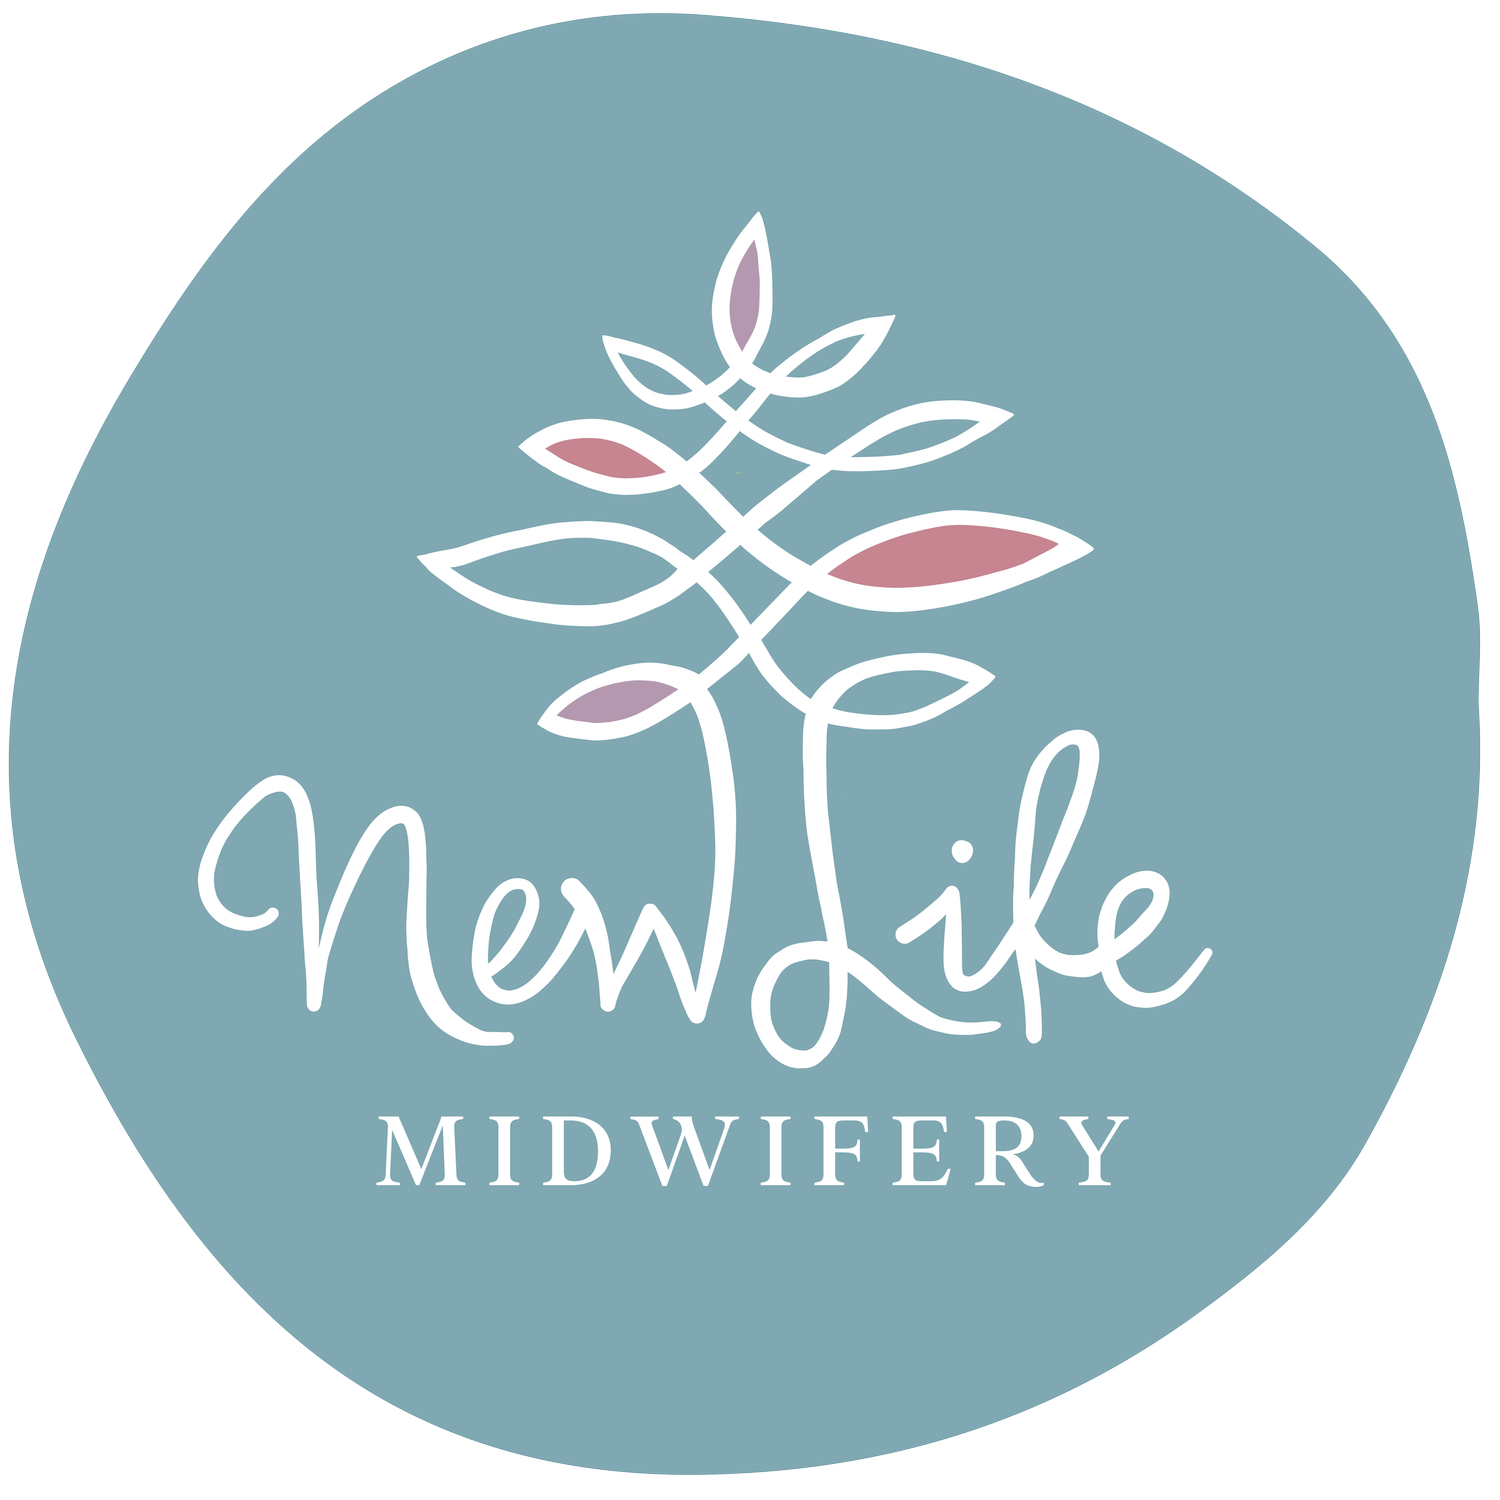 New Life Midwifery